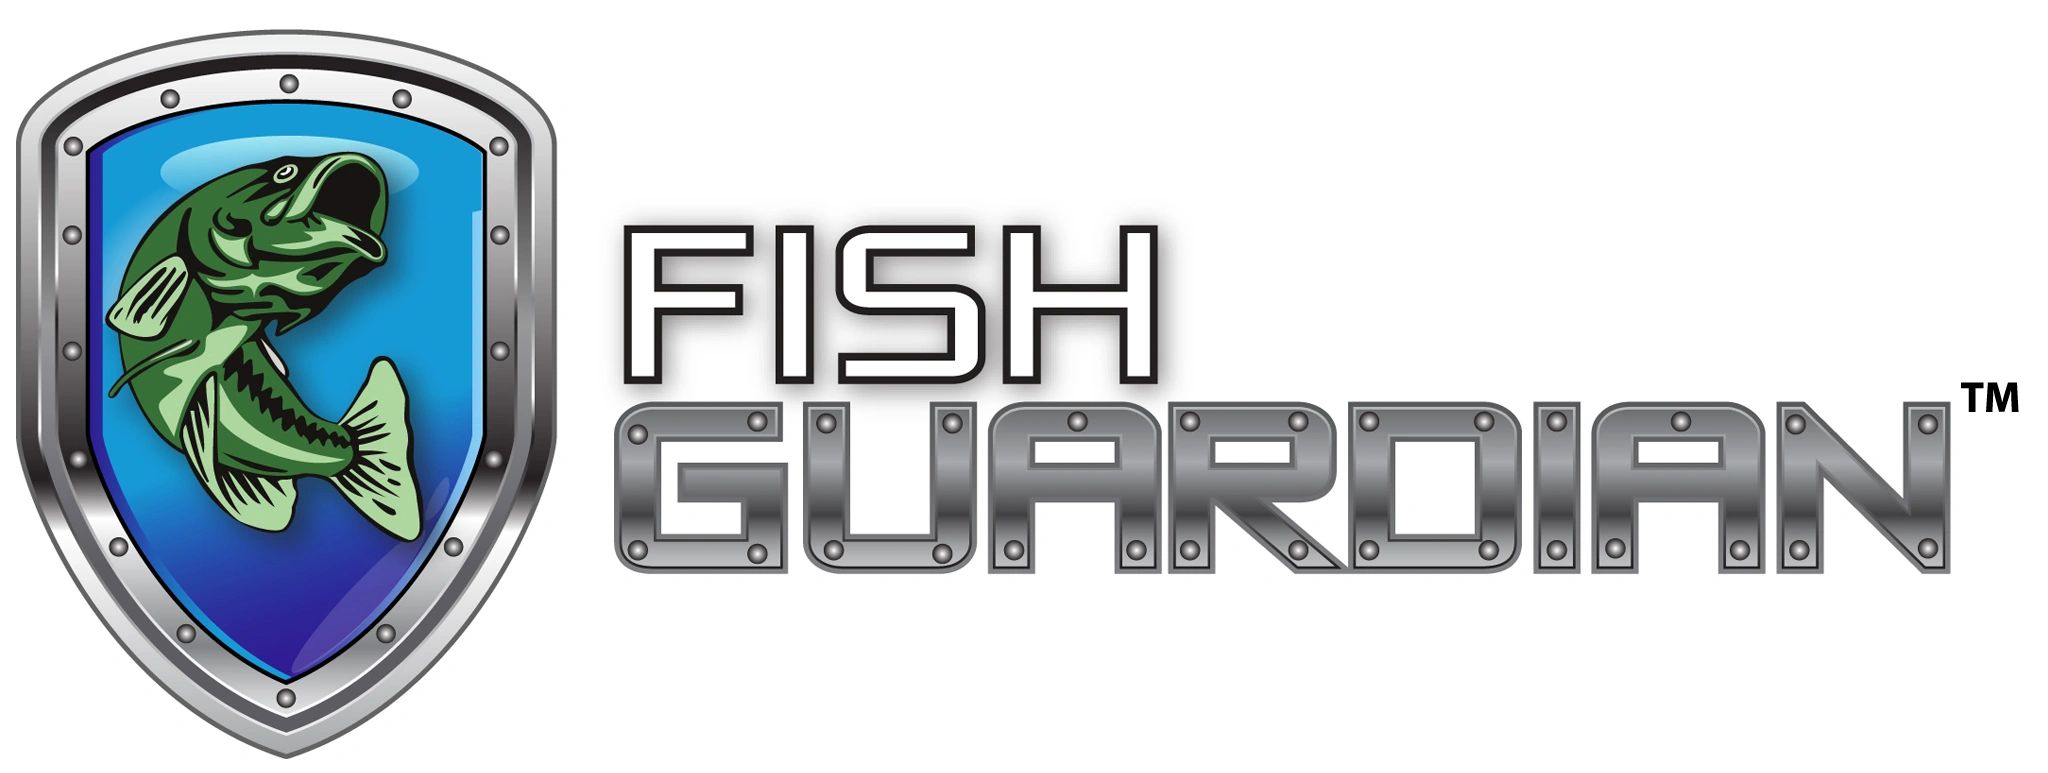 (c) Fishguardian.com